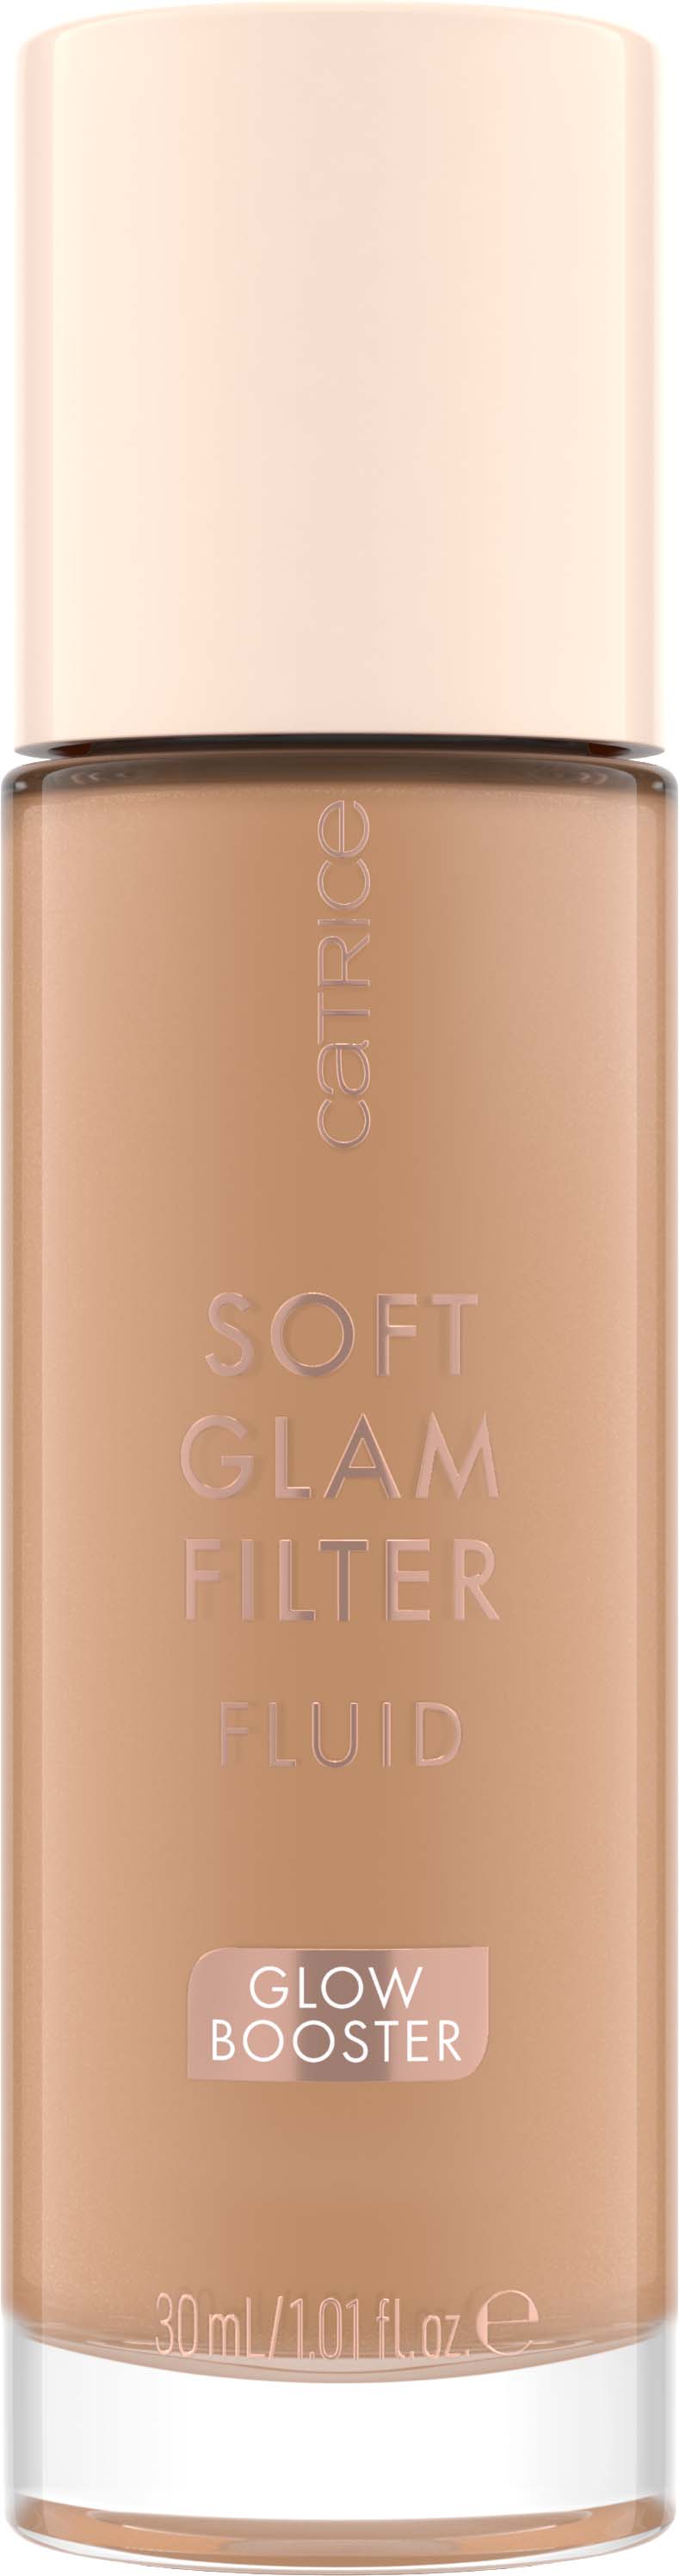 Filter Glam Soft Fluid Medium Catrice 030